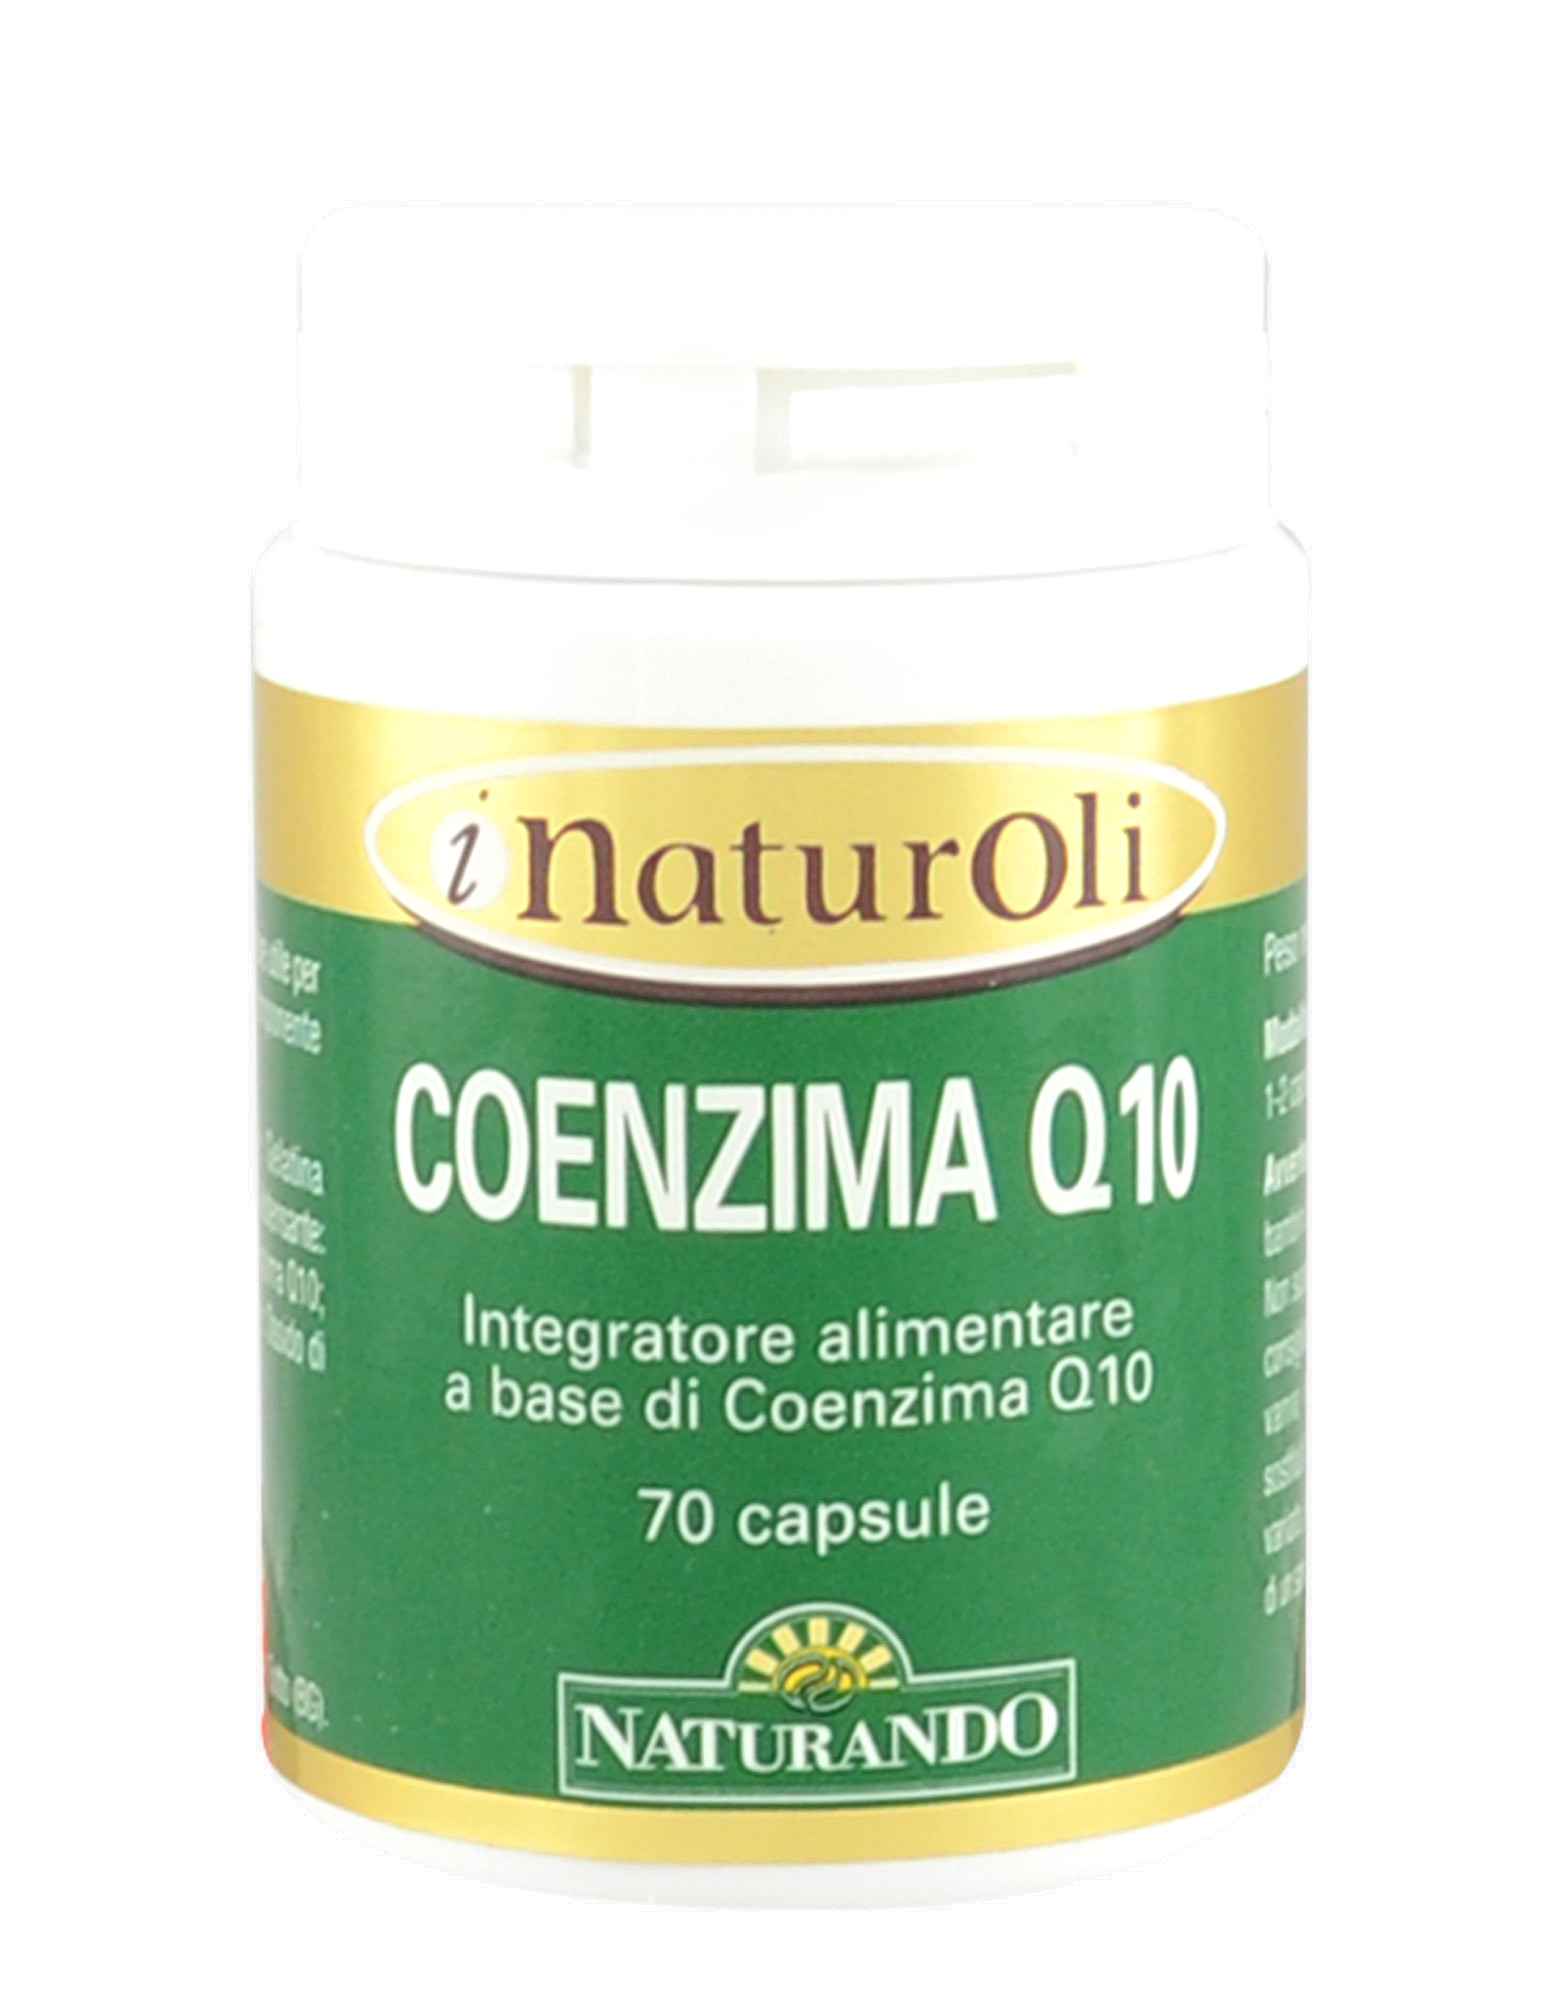 I NaturOli - Coenzima Q10 by NATURANDO (70 capsules)